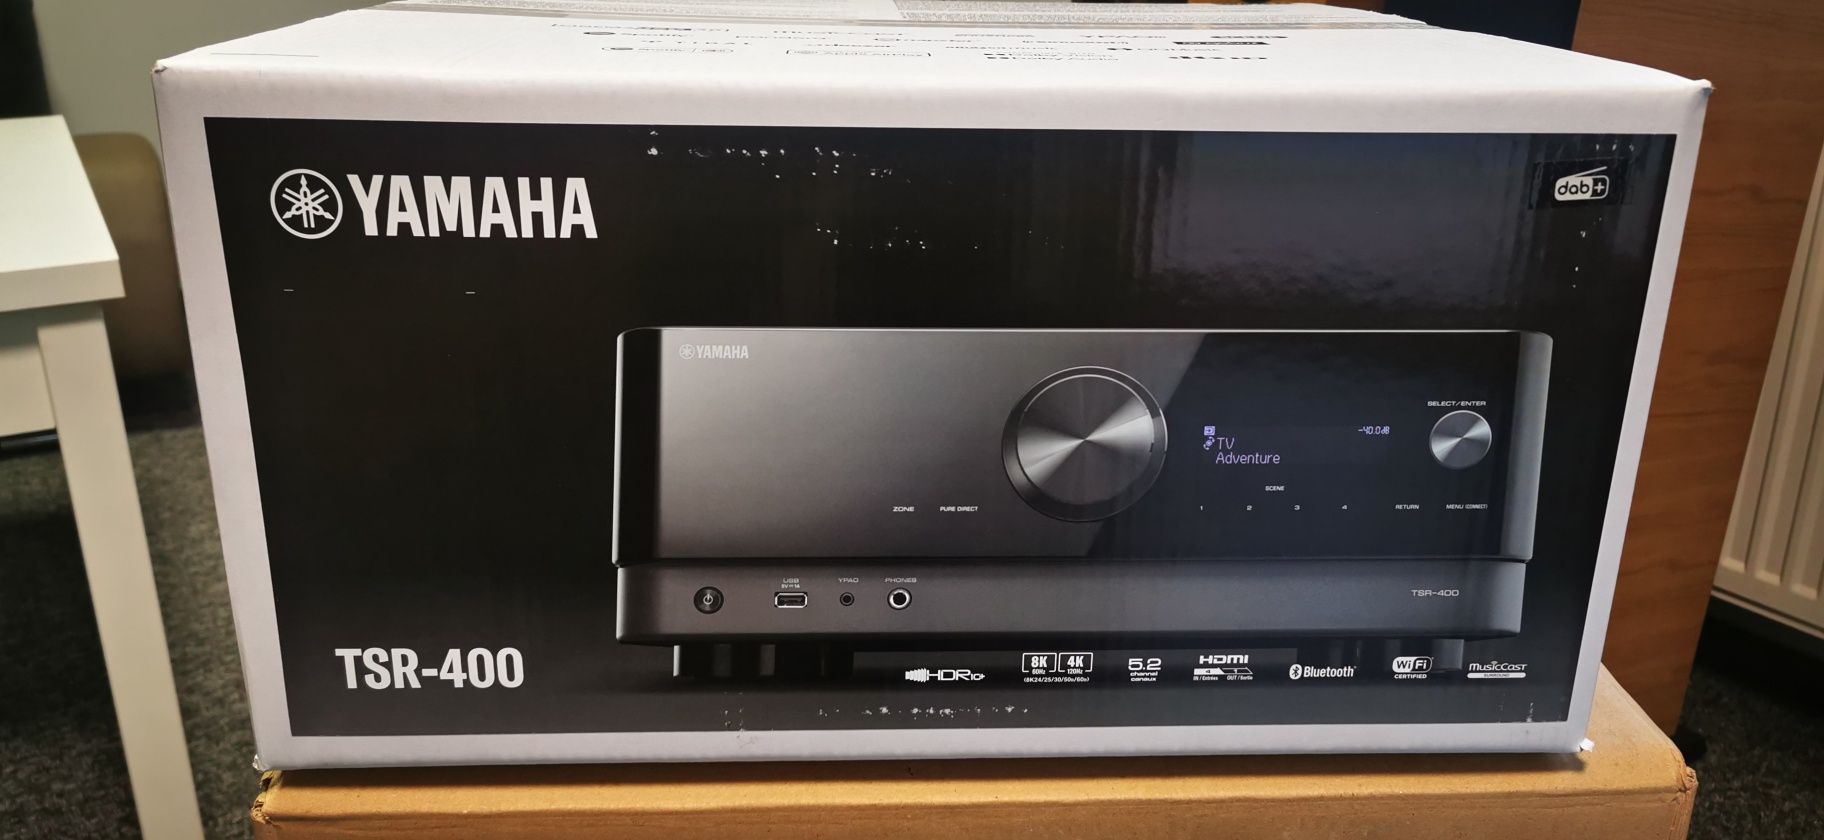 Amplituner Yamaha TSR-400 Musiccast Gwarancja 3 lata